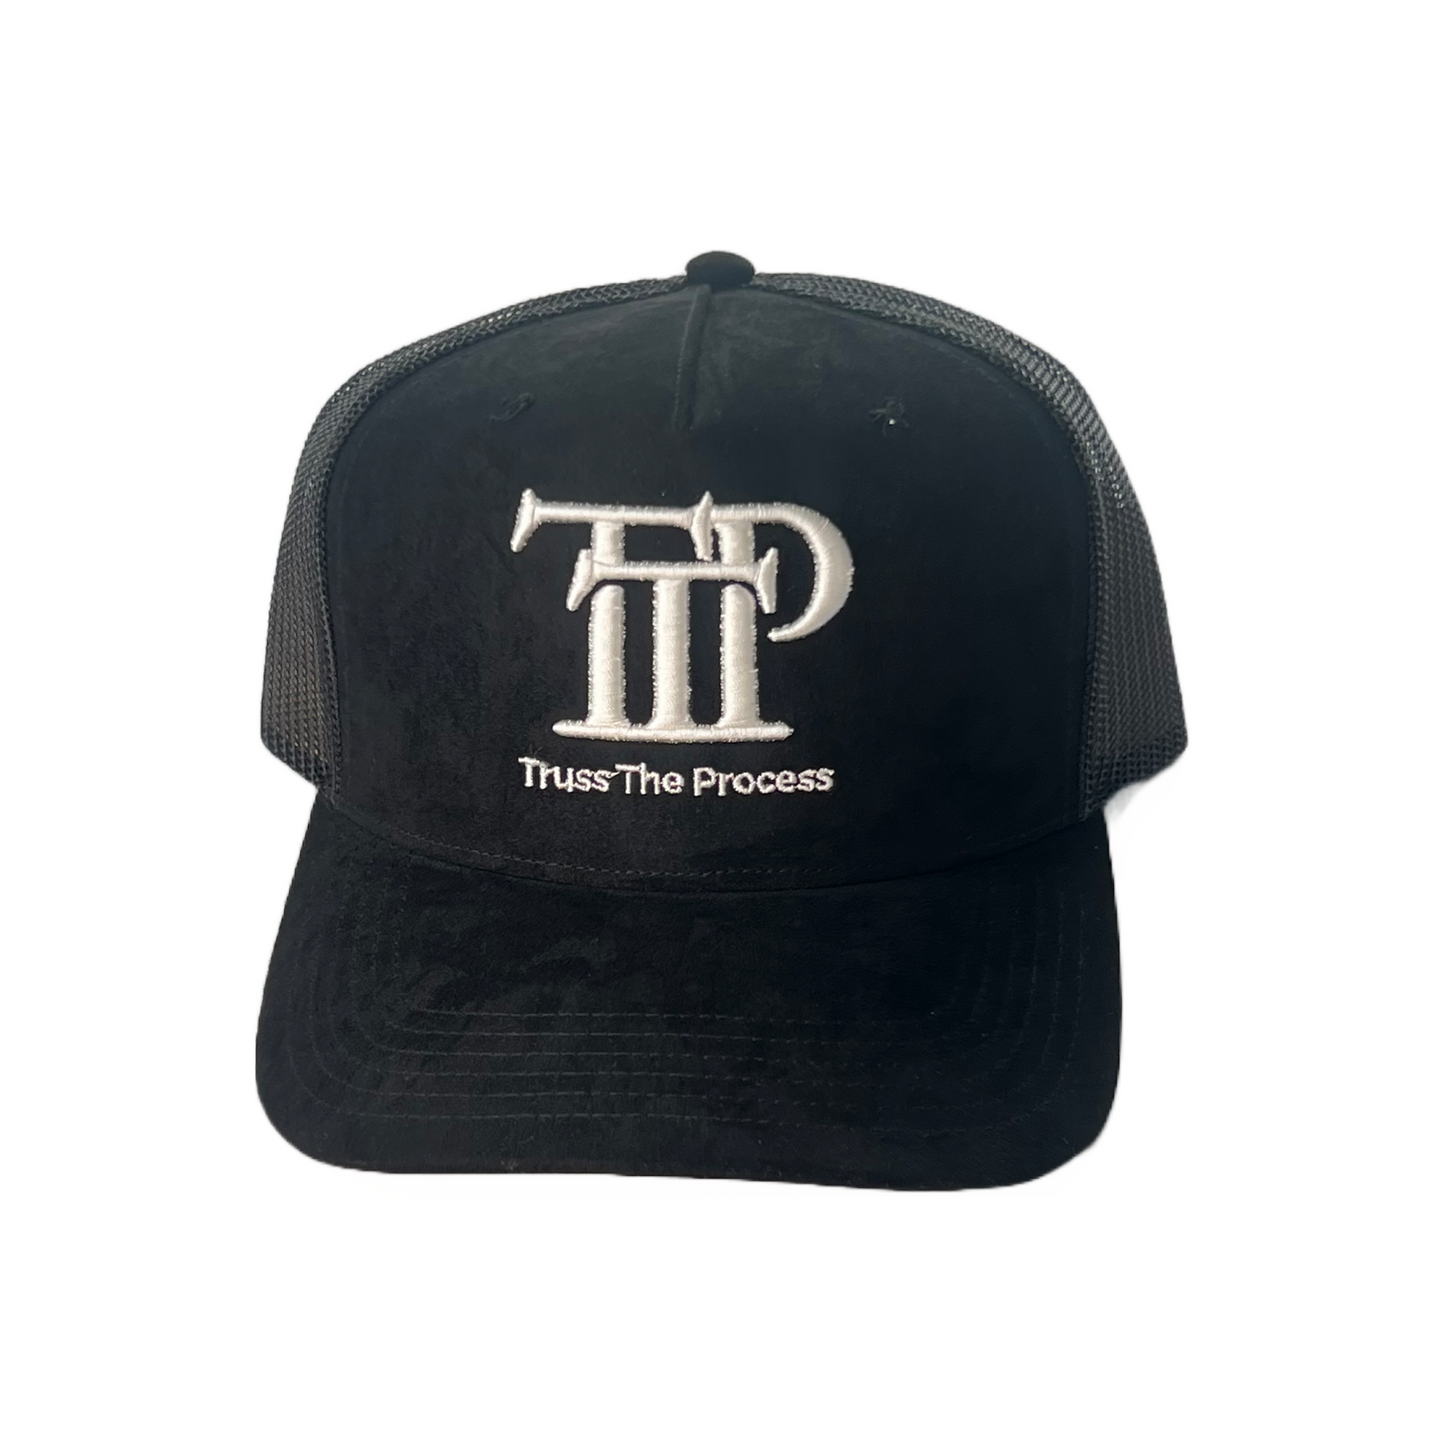 Black TTP Hat